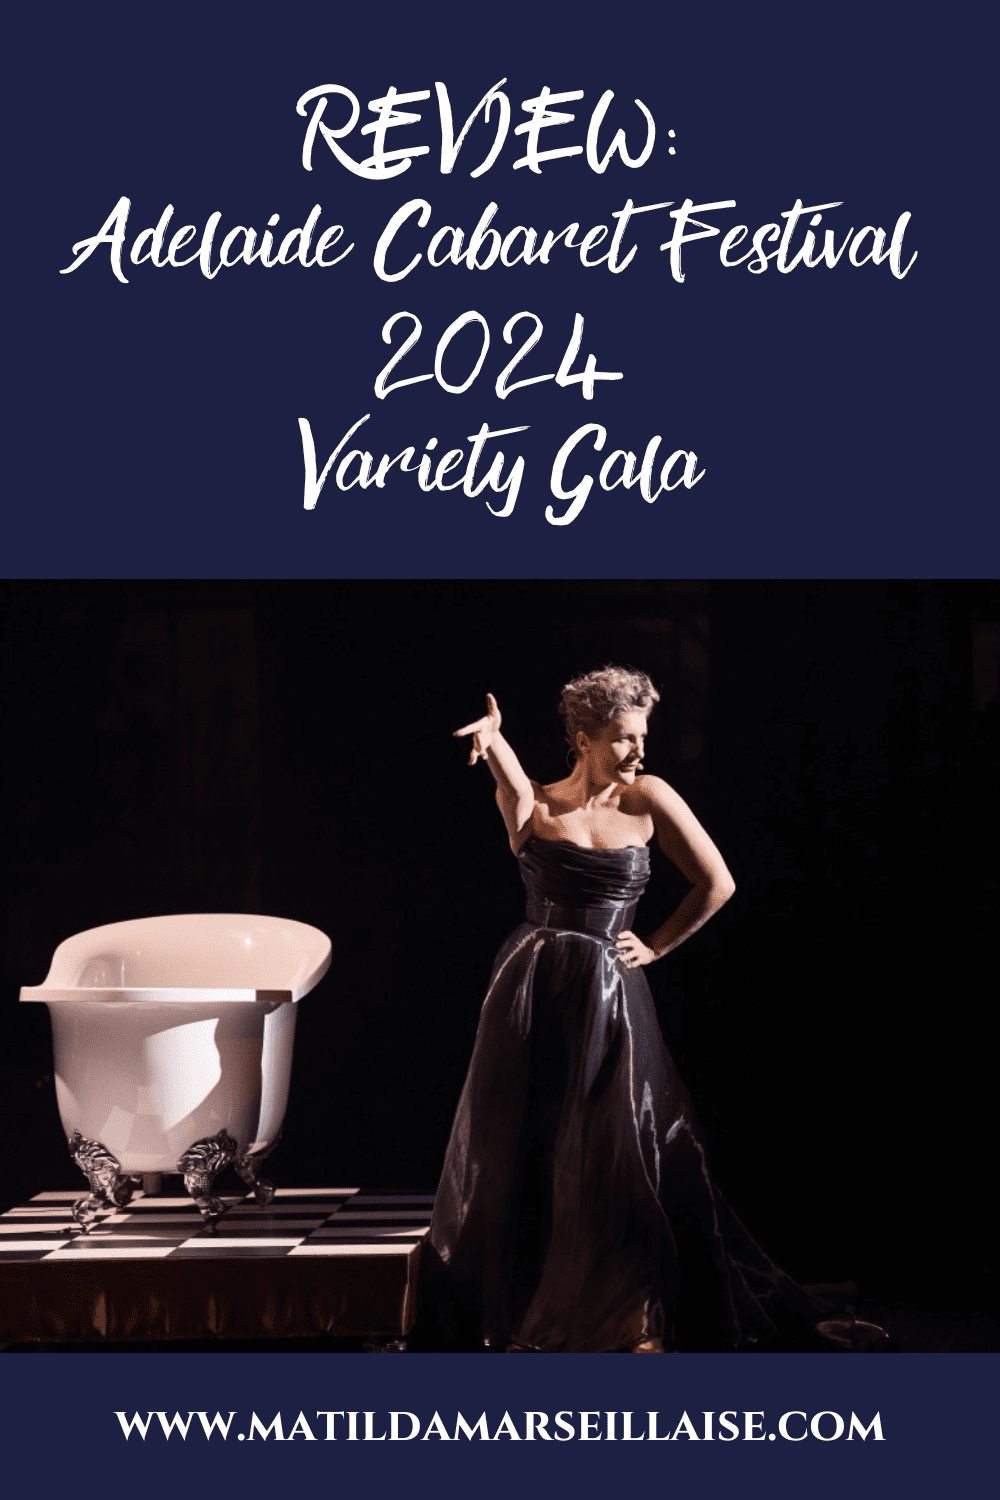 Adelaide Cabaret Festival 2024 Variety Gala